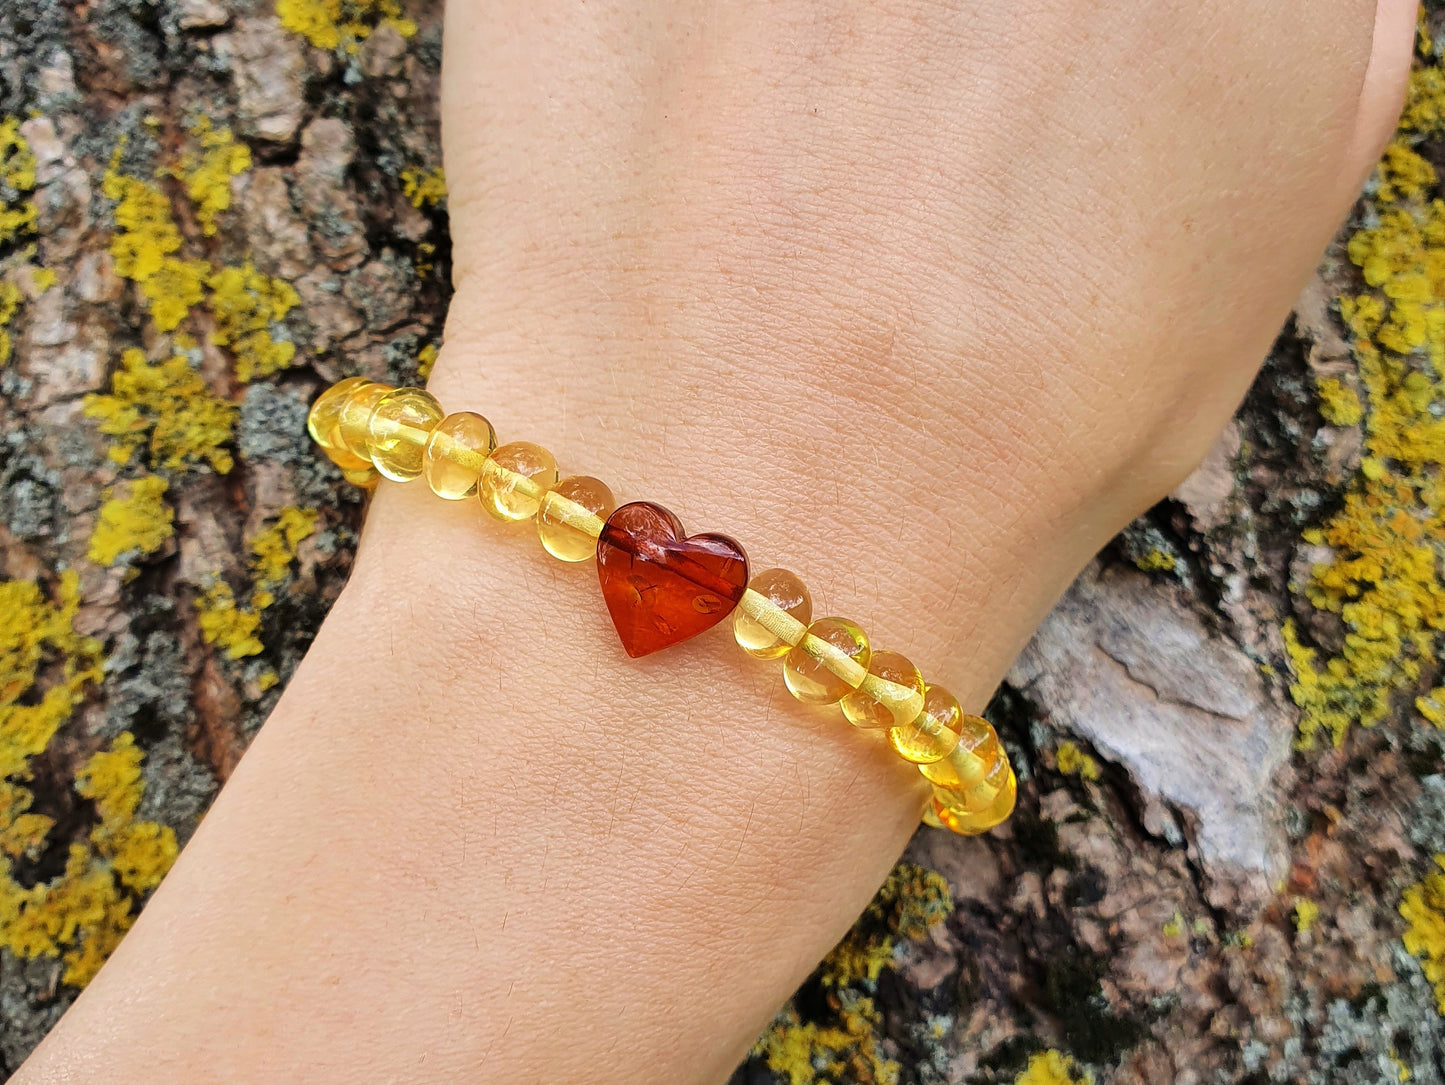 amber bracelet with heart pendant